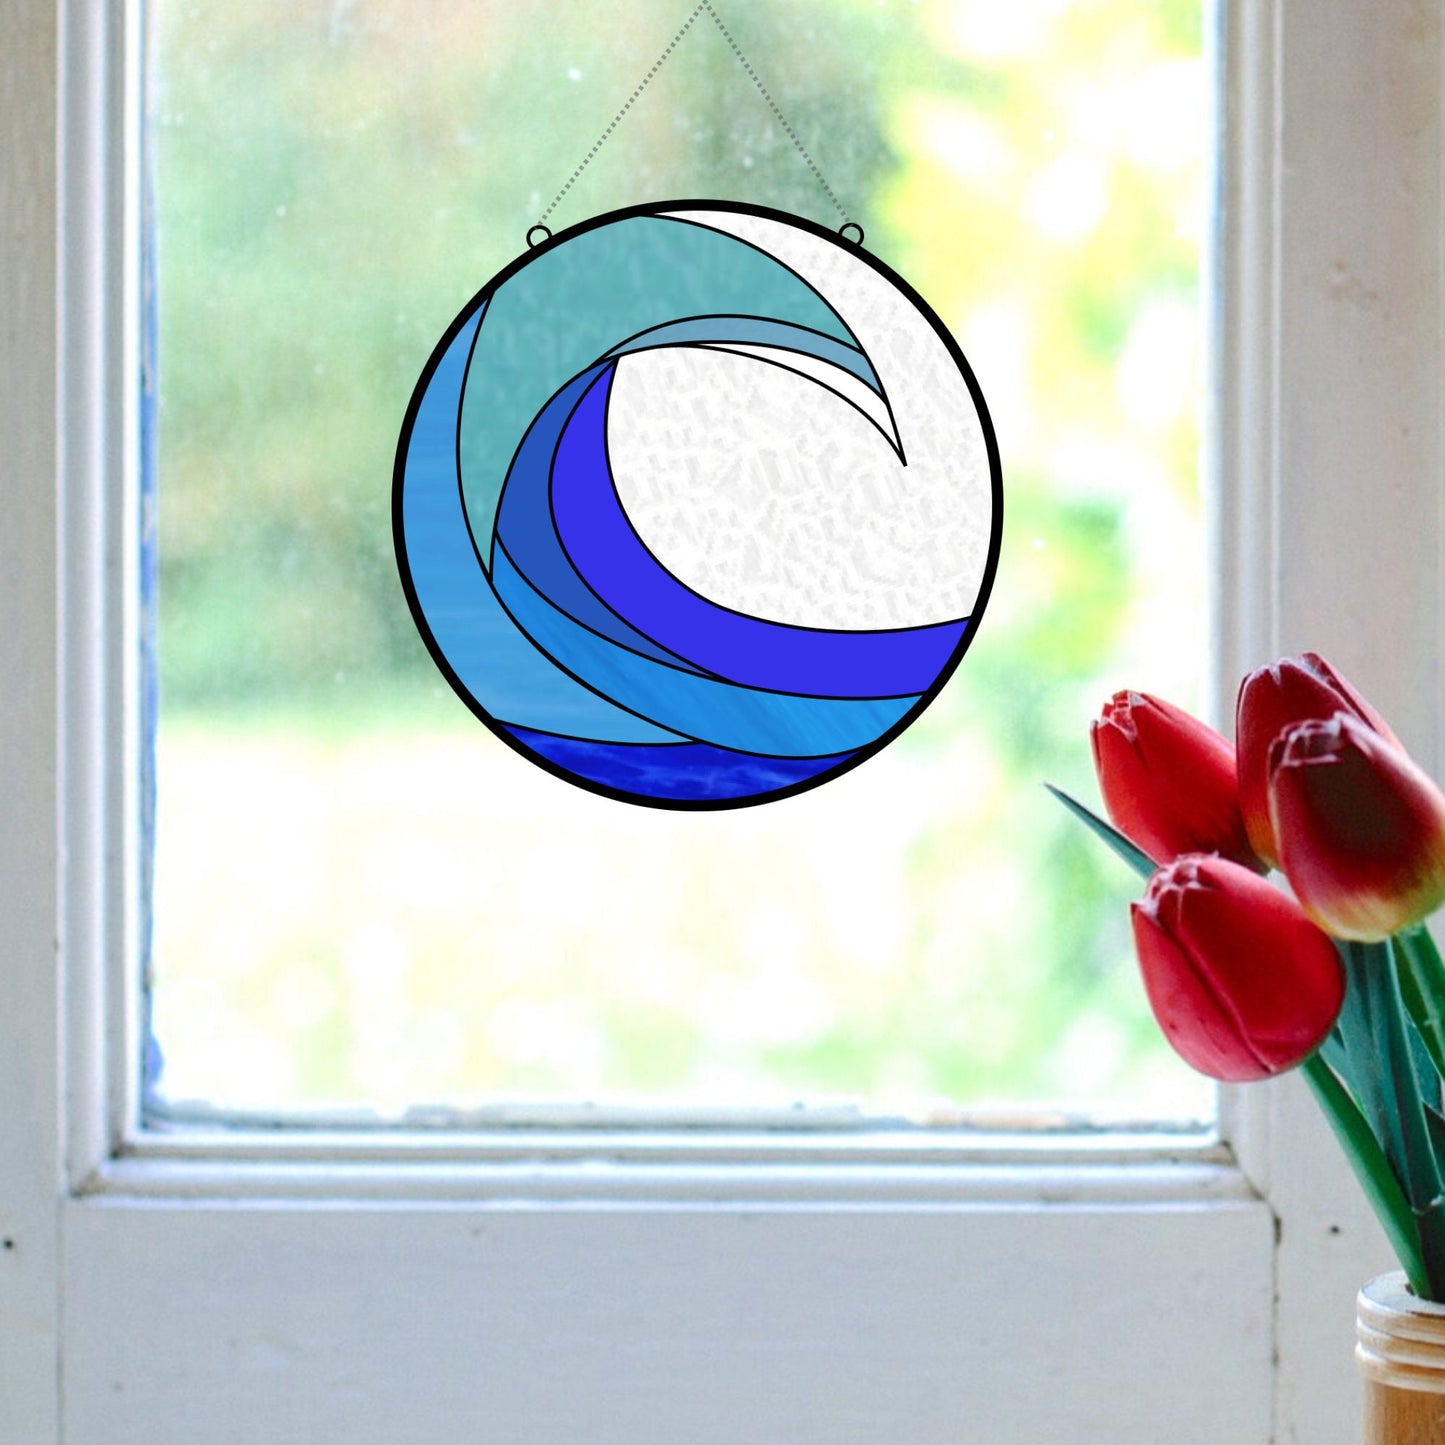 Ocean Wave Stained Glass Suncatcher Pattern